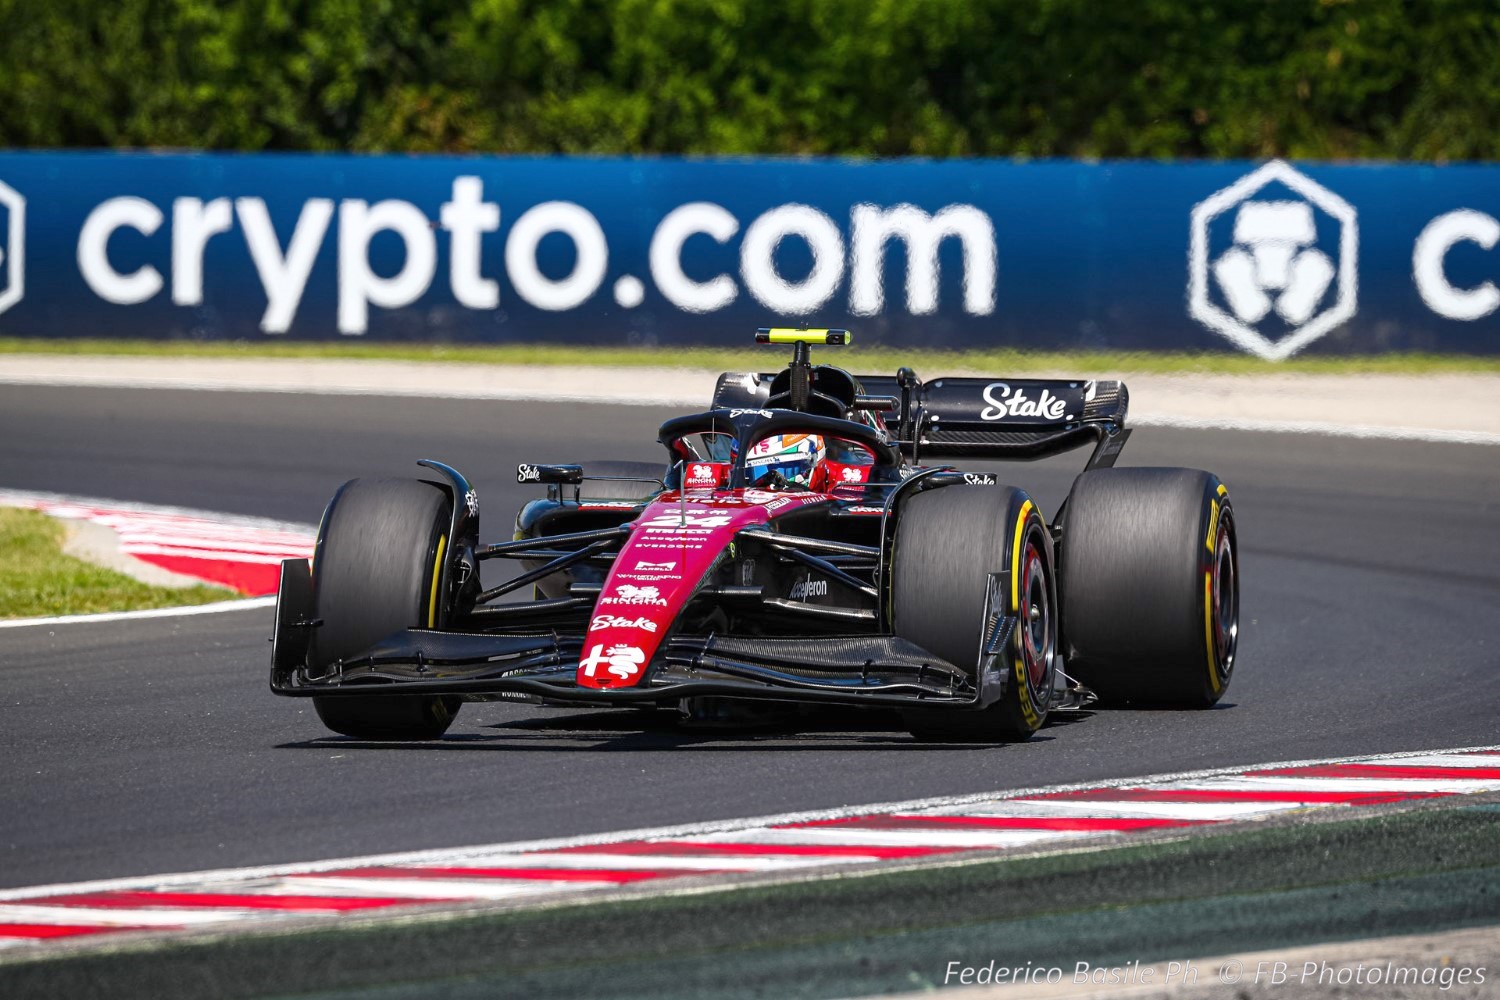 #24 Guanyu Zhou, (CHI) Alfa Romeo Sauber during the Hungarian GP, Budapest 20-23 July 2023 at the Hungaroring, Formula 1 World championship 2023.